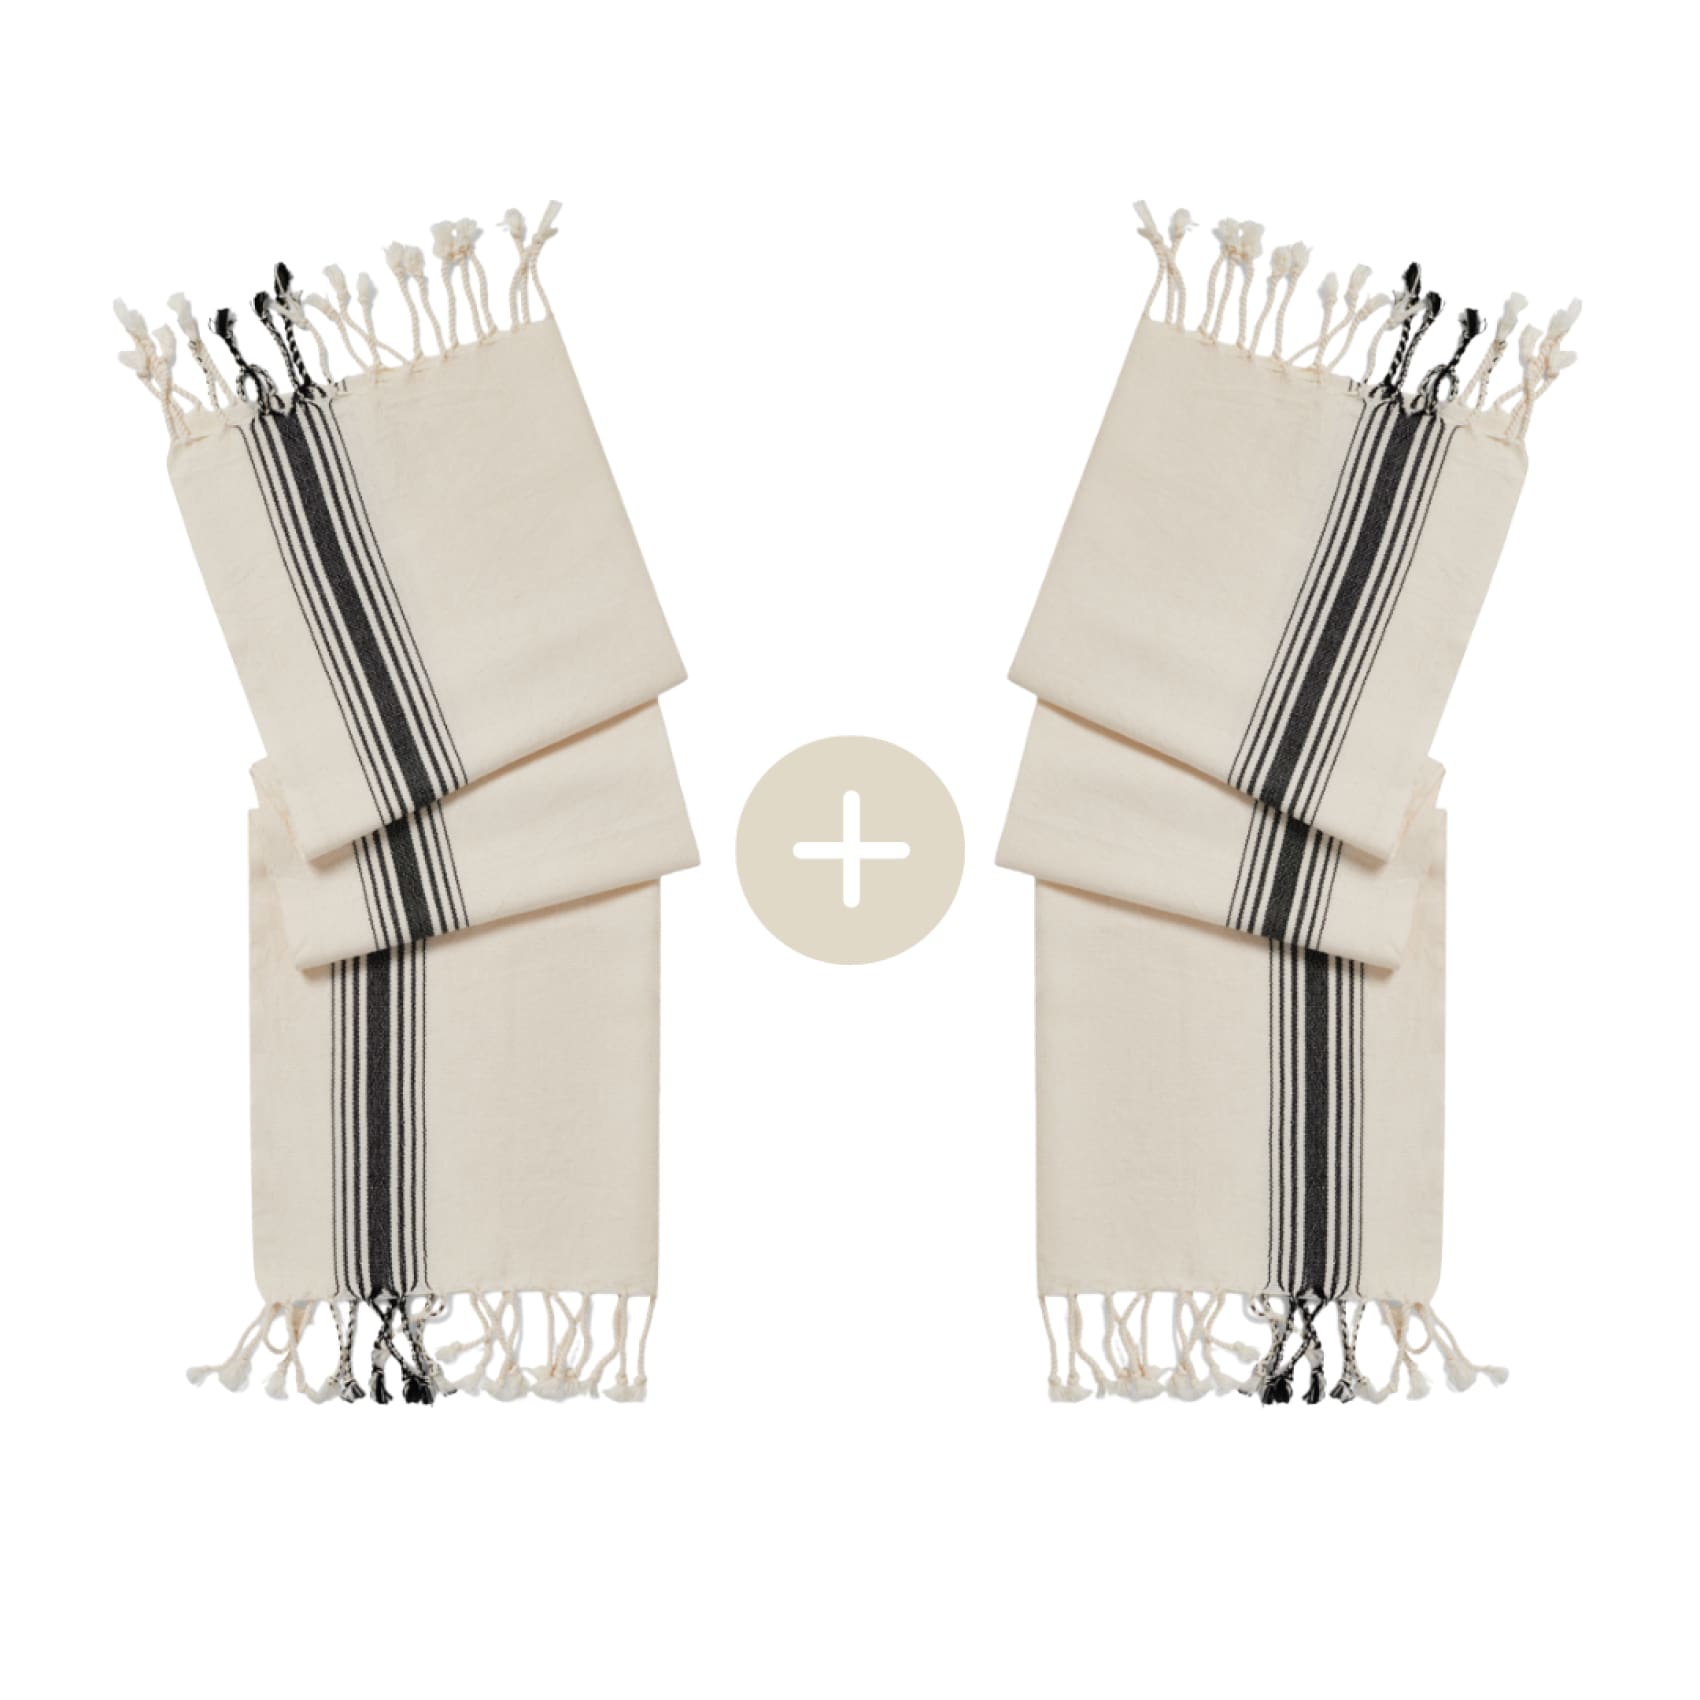 bergama-cotton-hand-towel-set-save-5-bundle-bundles-duo-luks-linen-shorts-fashion-accessory-486.jpg